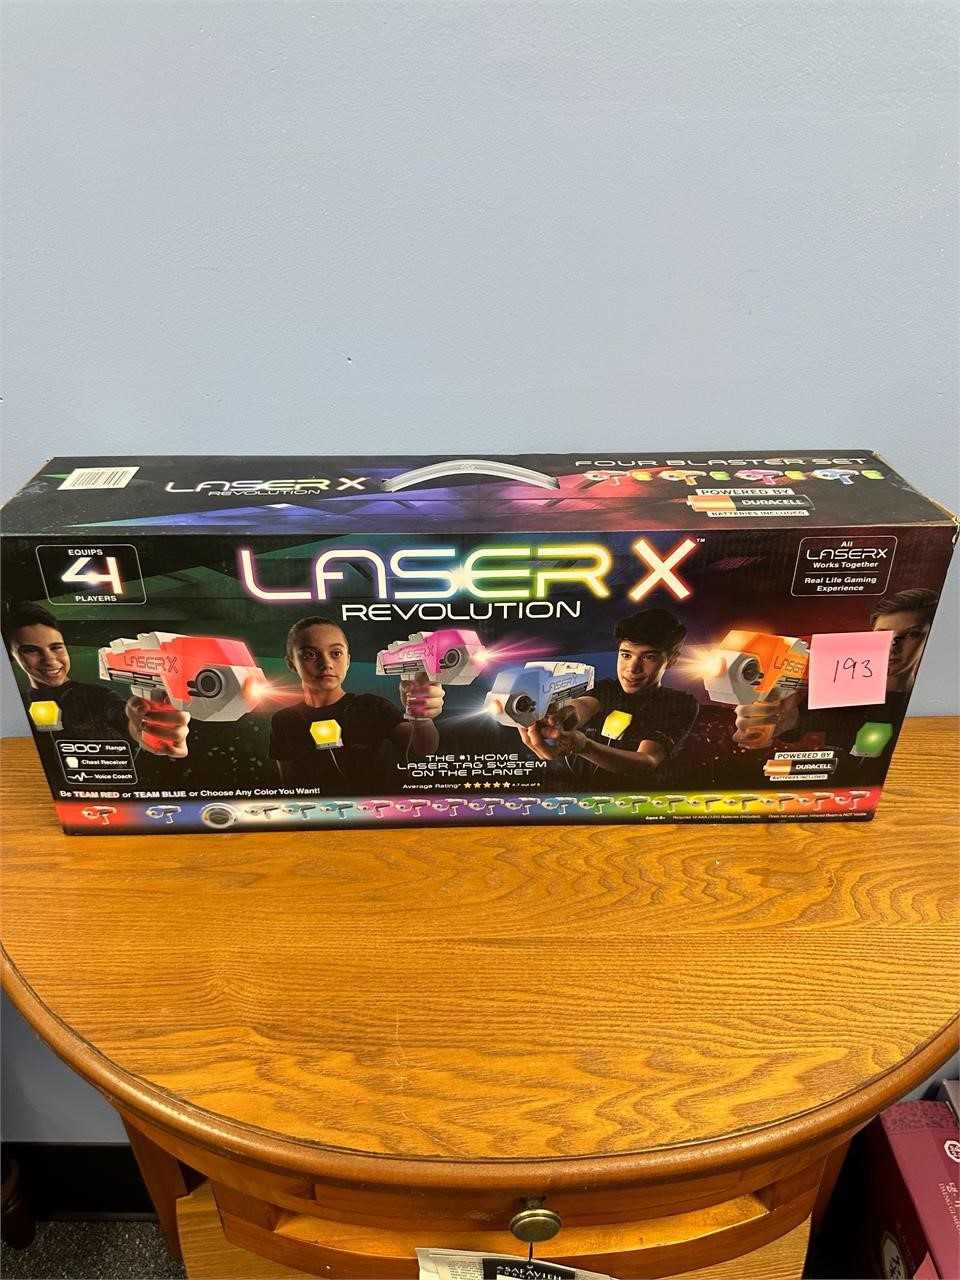 LASER X 4 Player Laser Tag